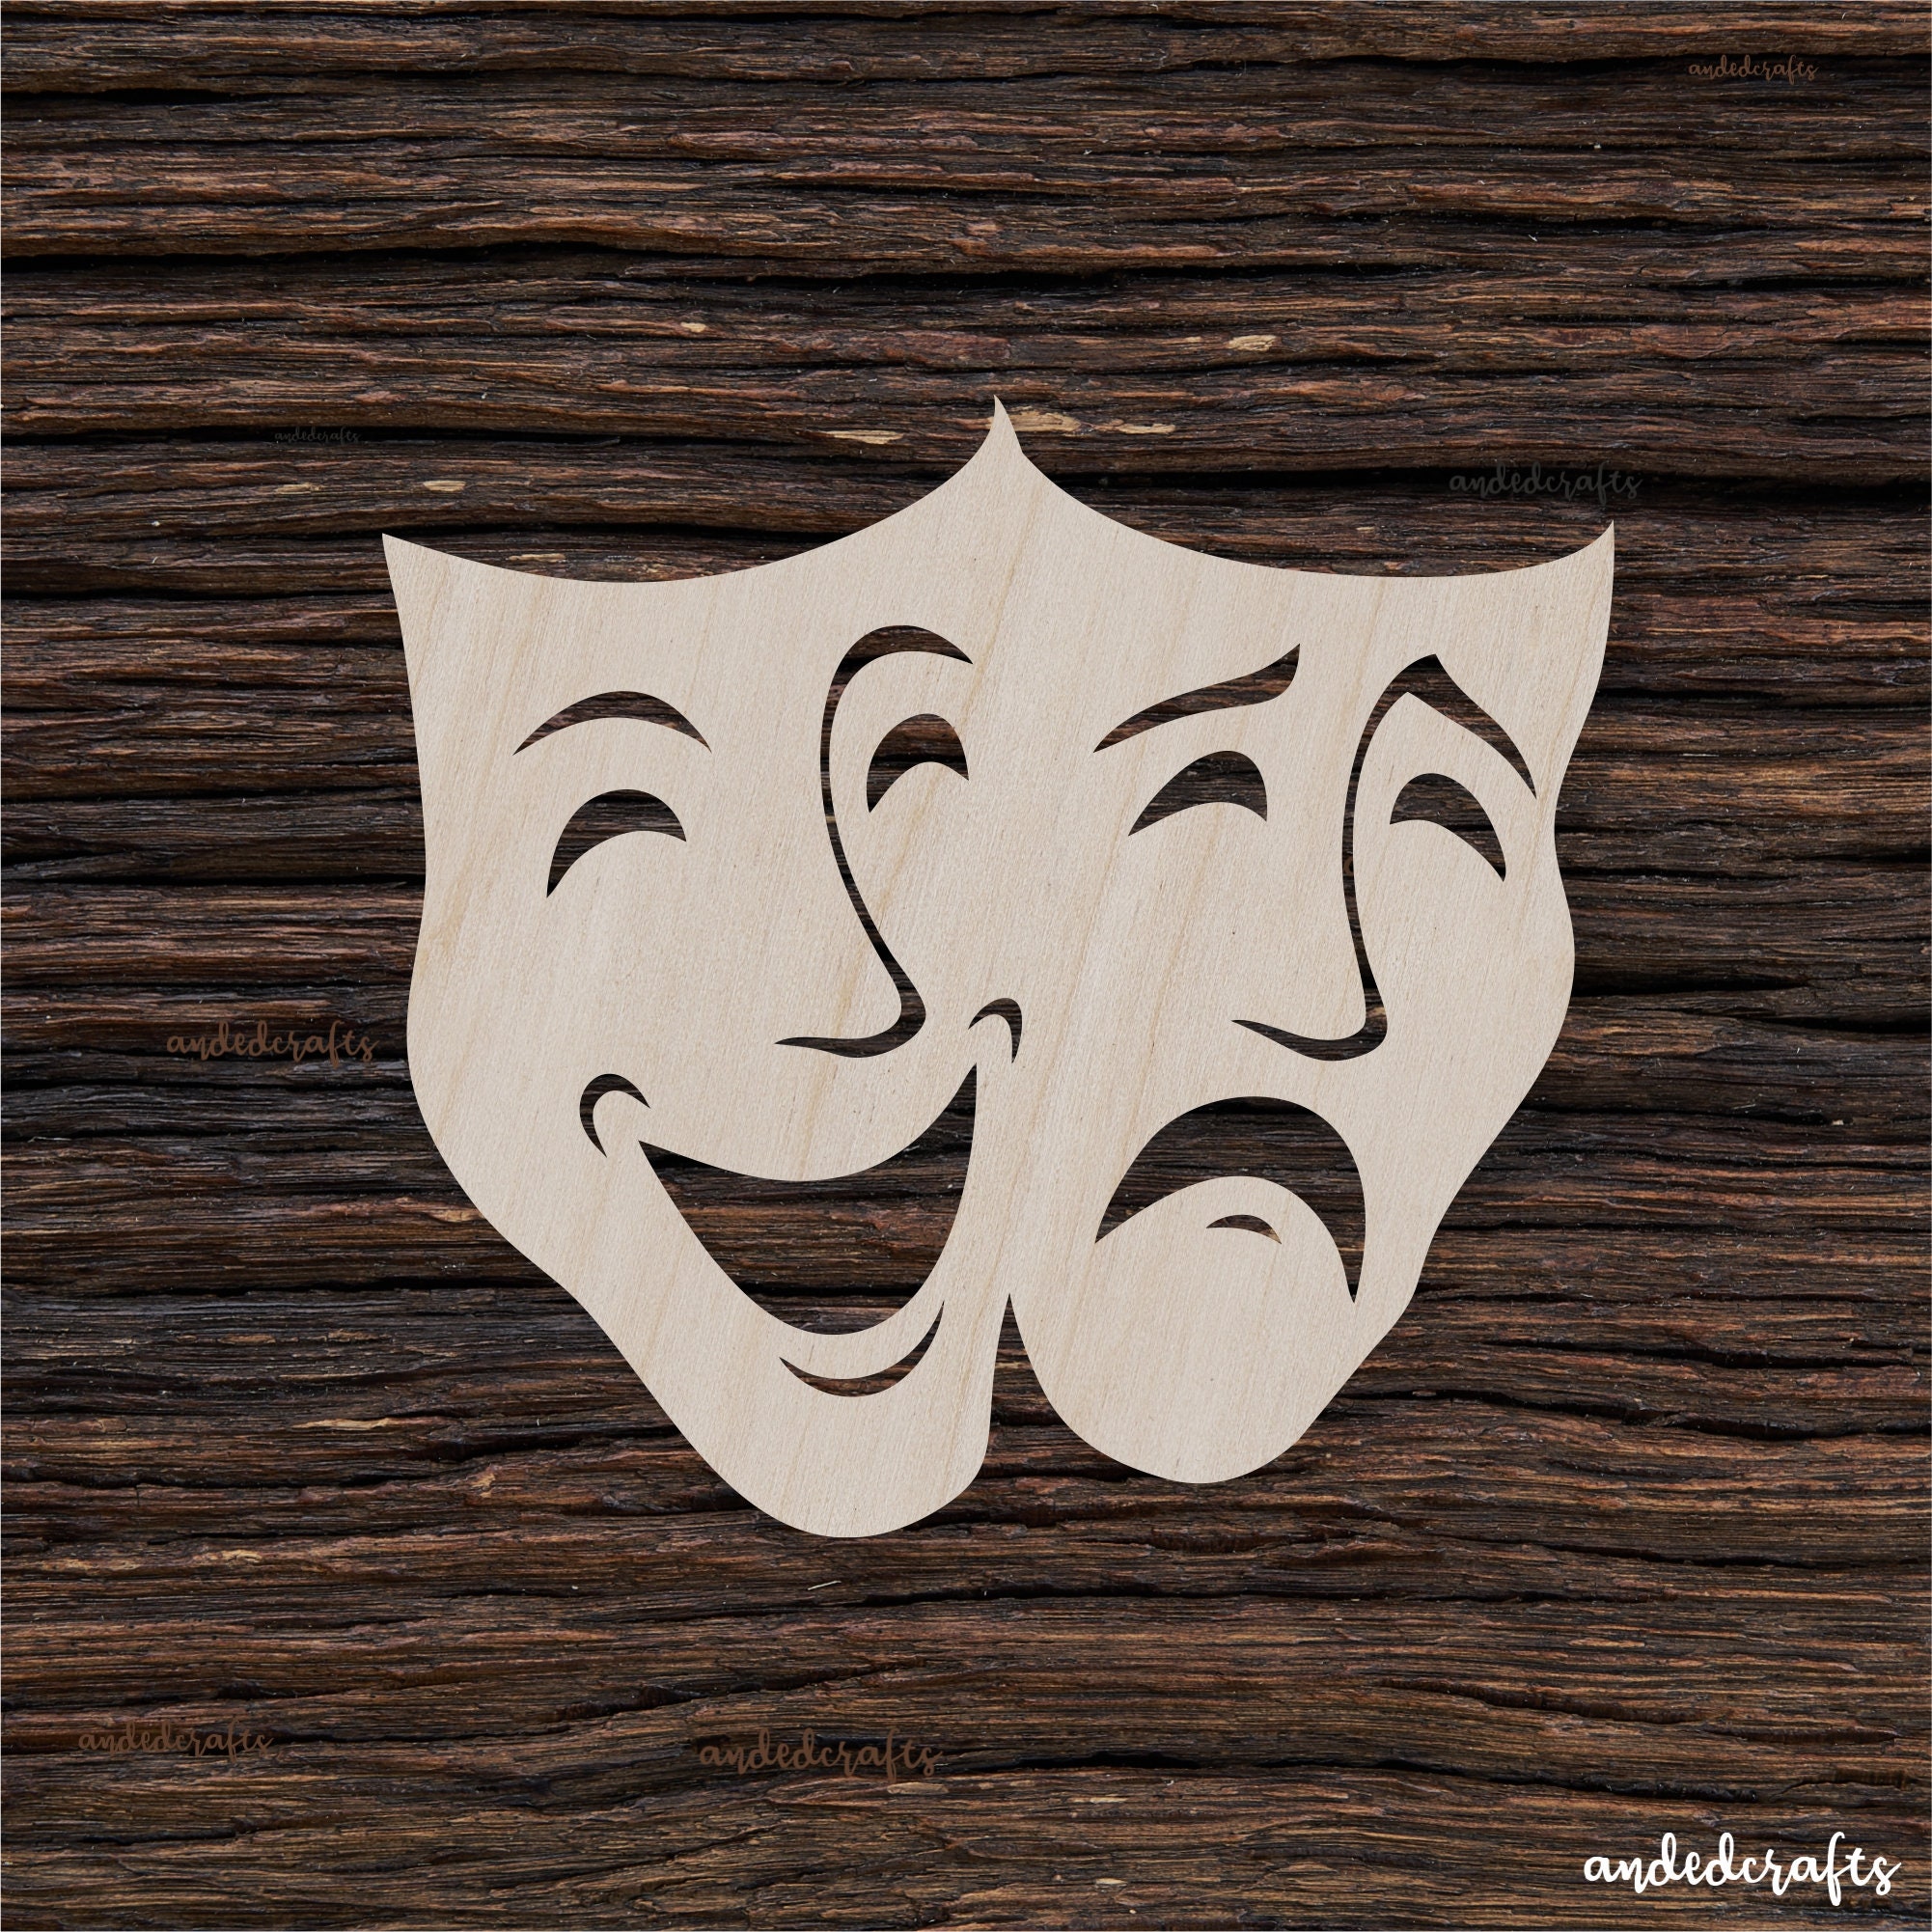 Mardi Gras Comedy and Drama Mask Patch Custom Made 